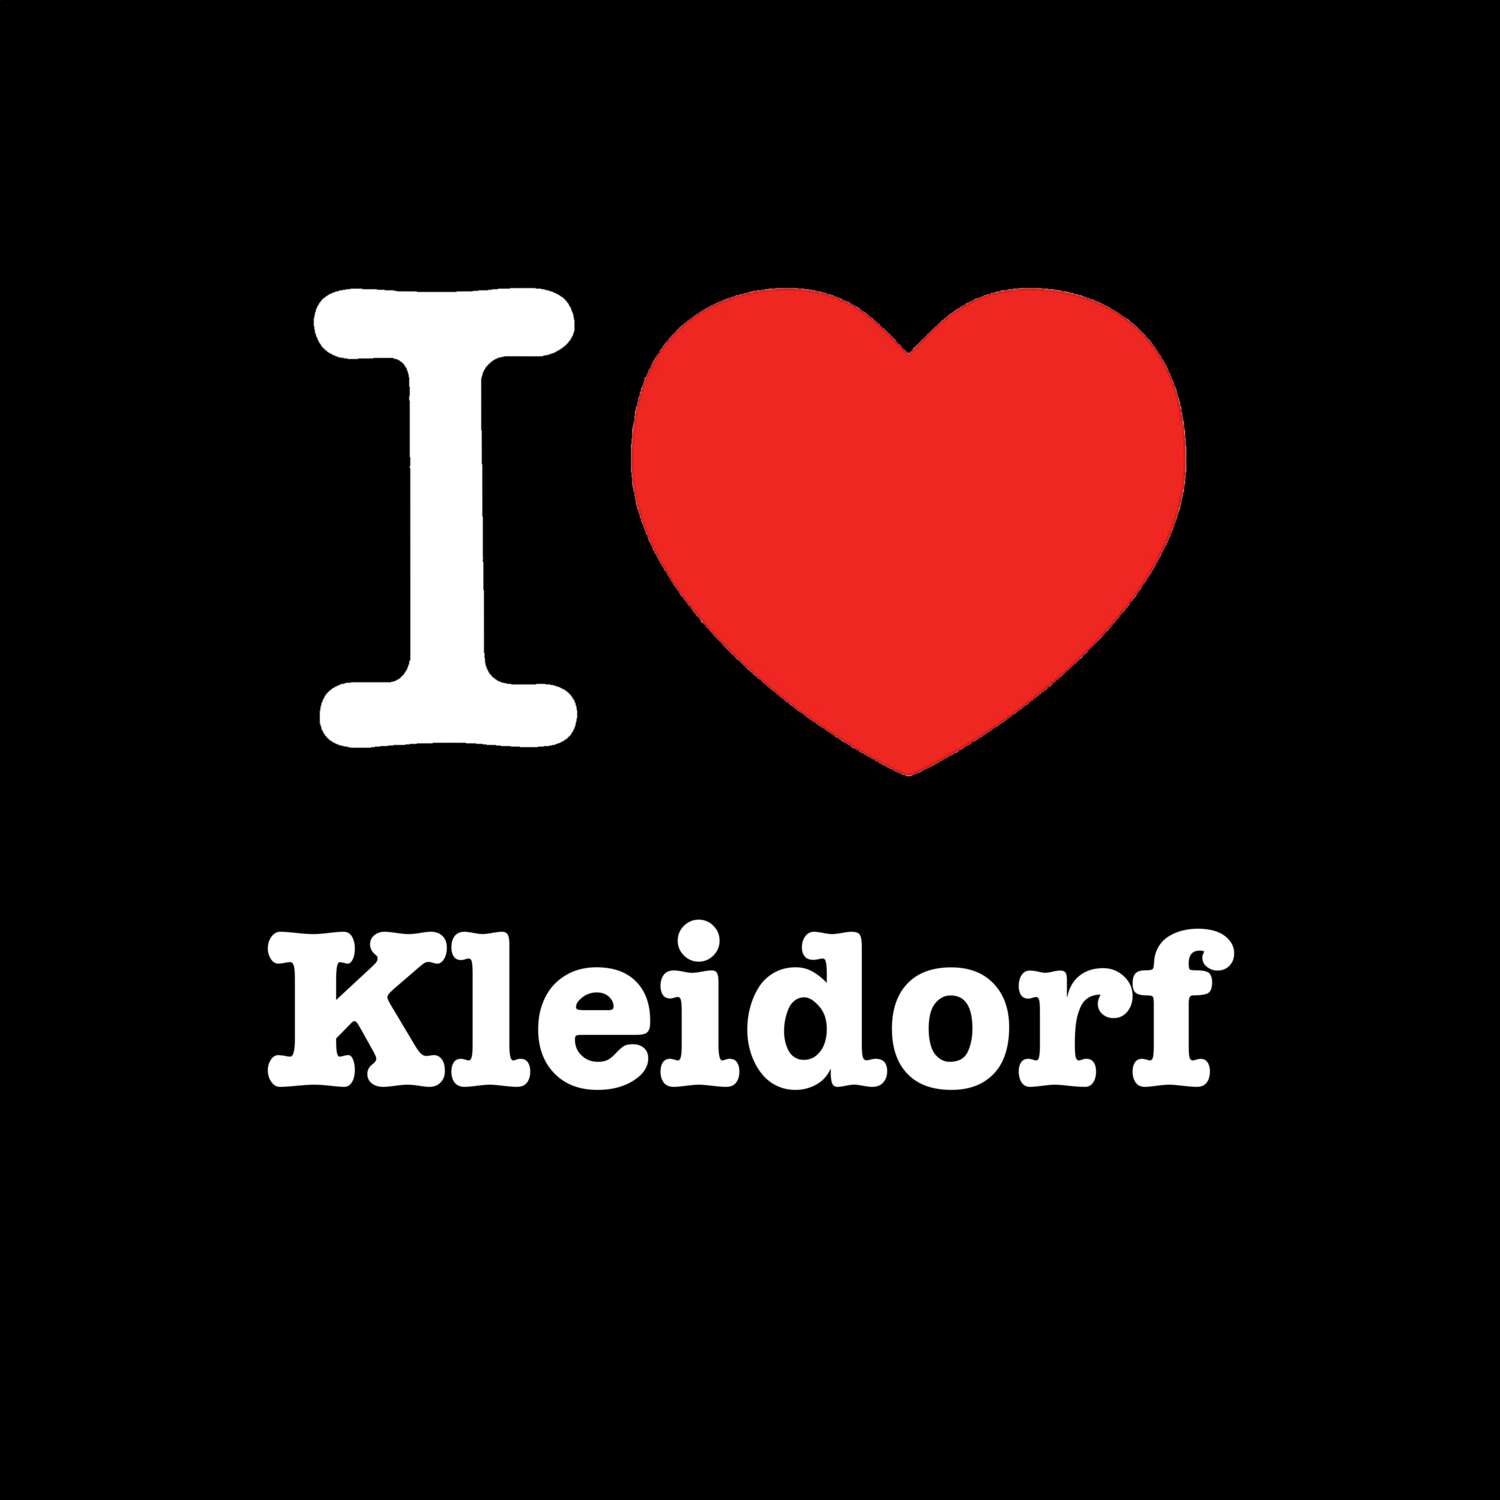 Kleidorf T-Shirt »I love«